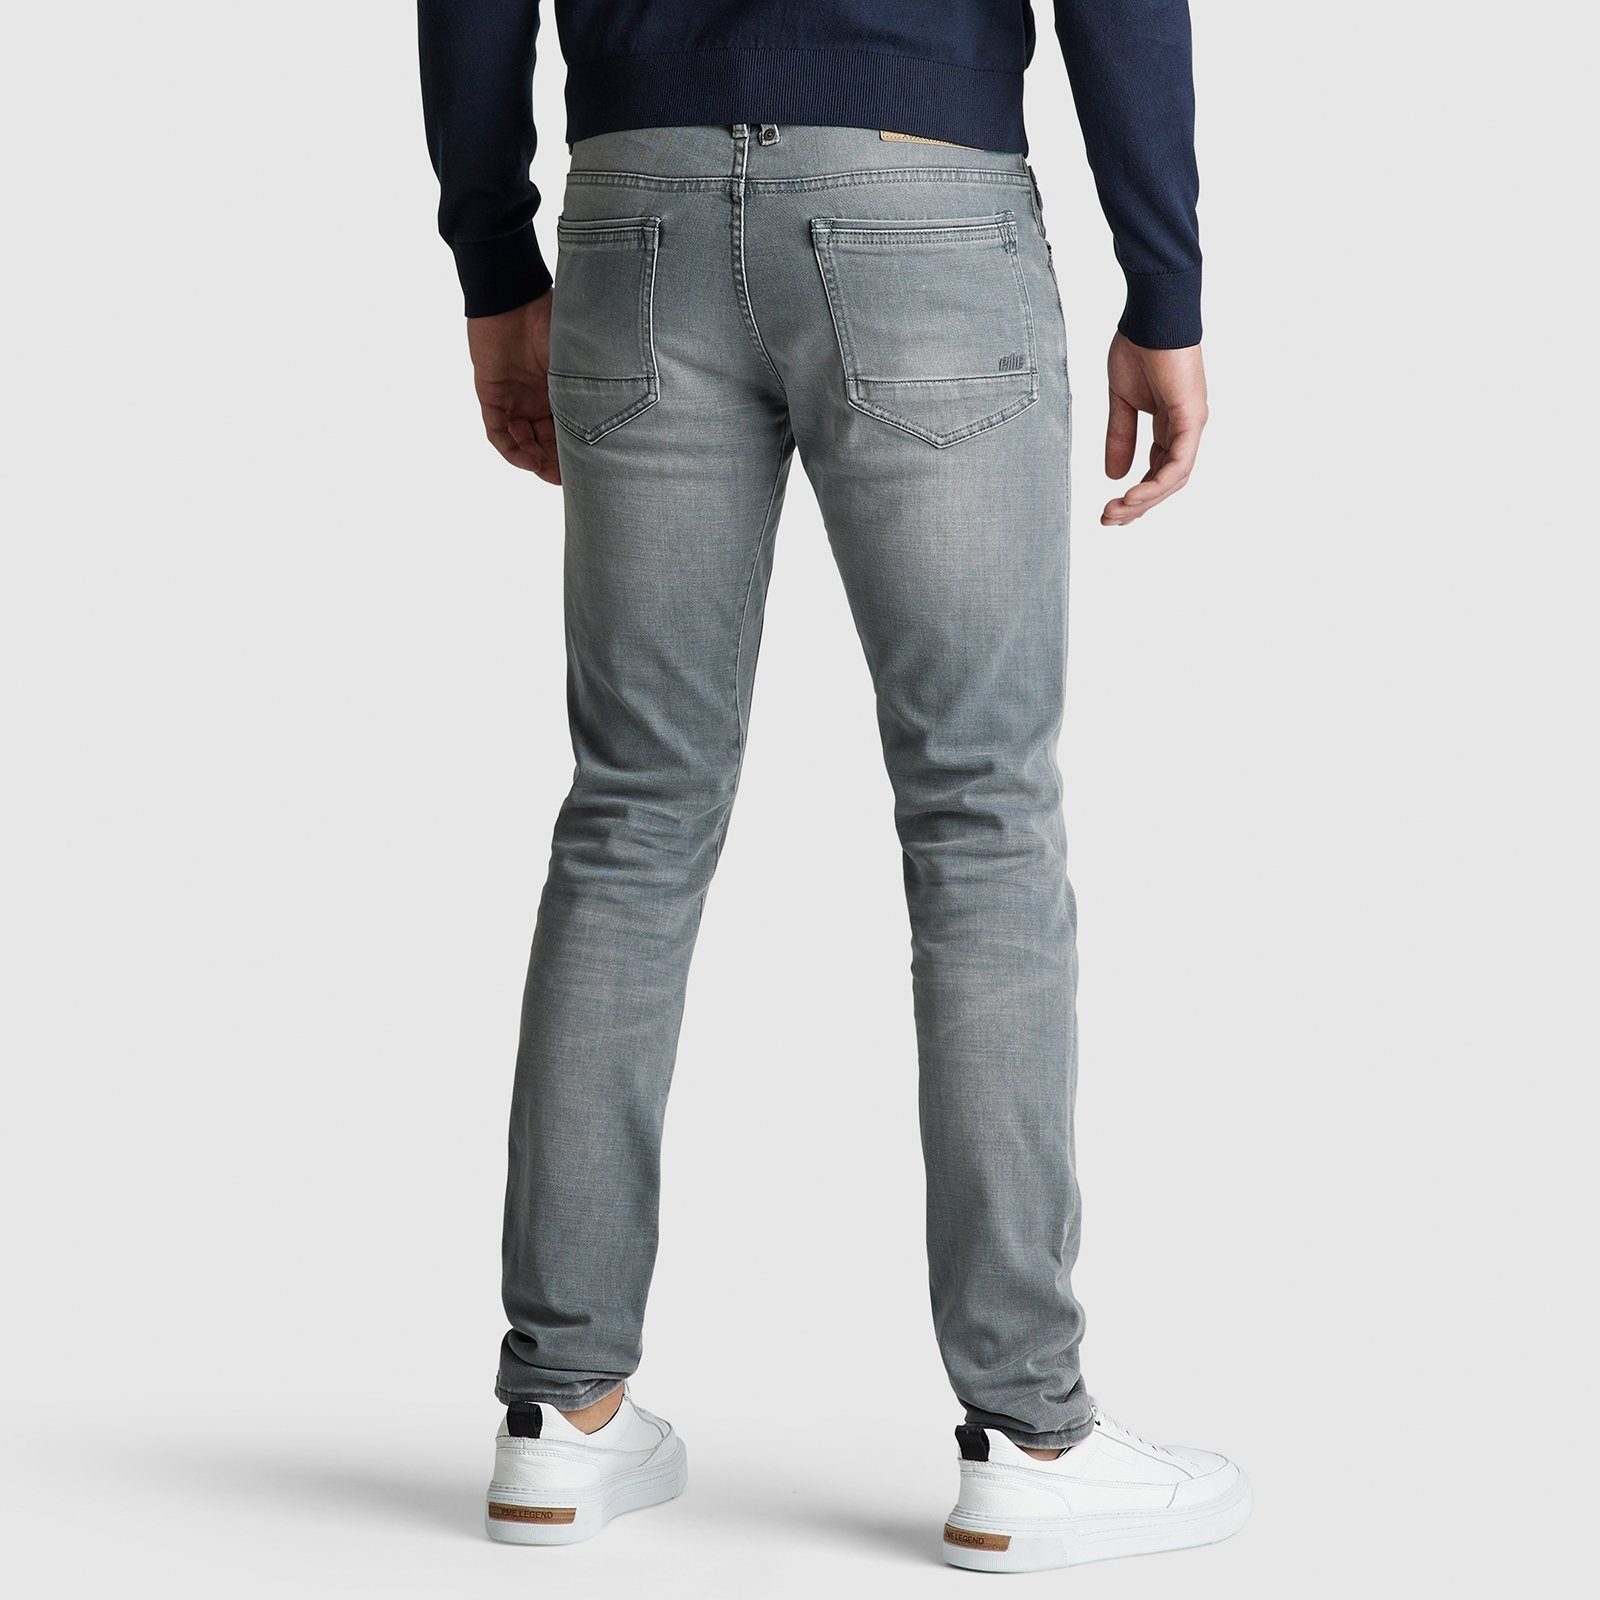 PTR140-LHG LEGEND wash grey 5-Pocket-Jeans TAILWHEEL soft PME PME LEGEND